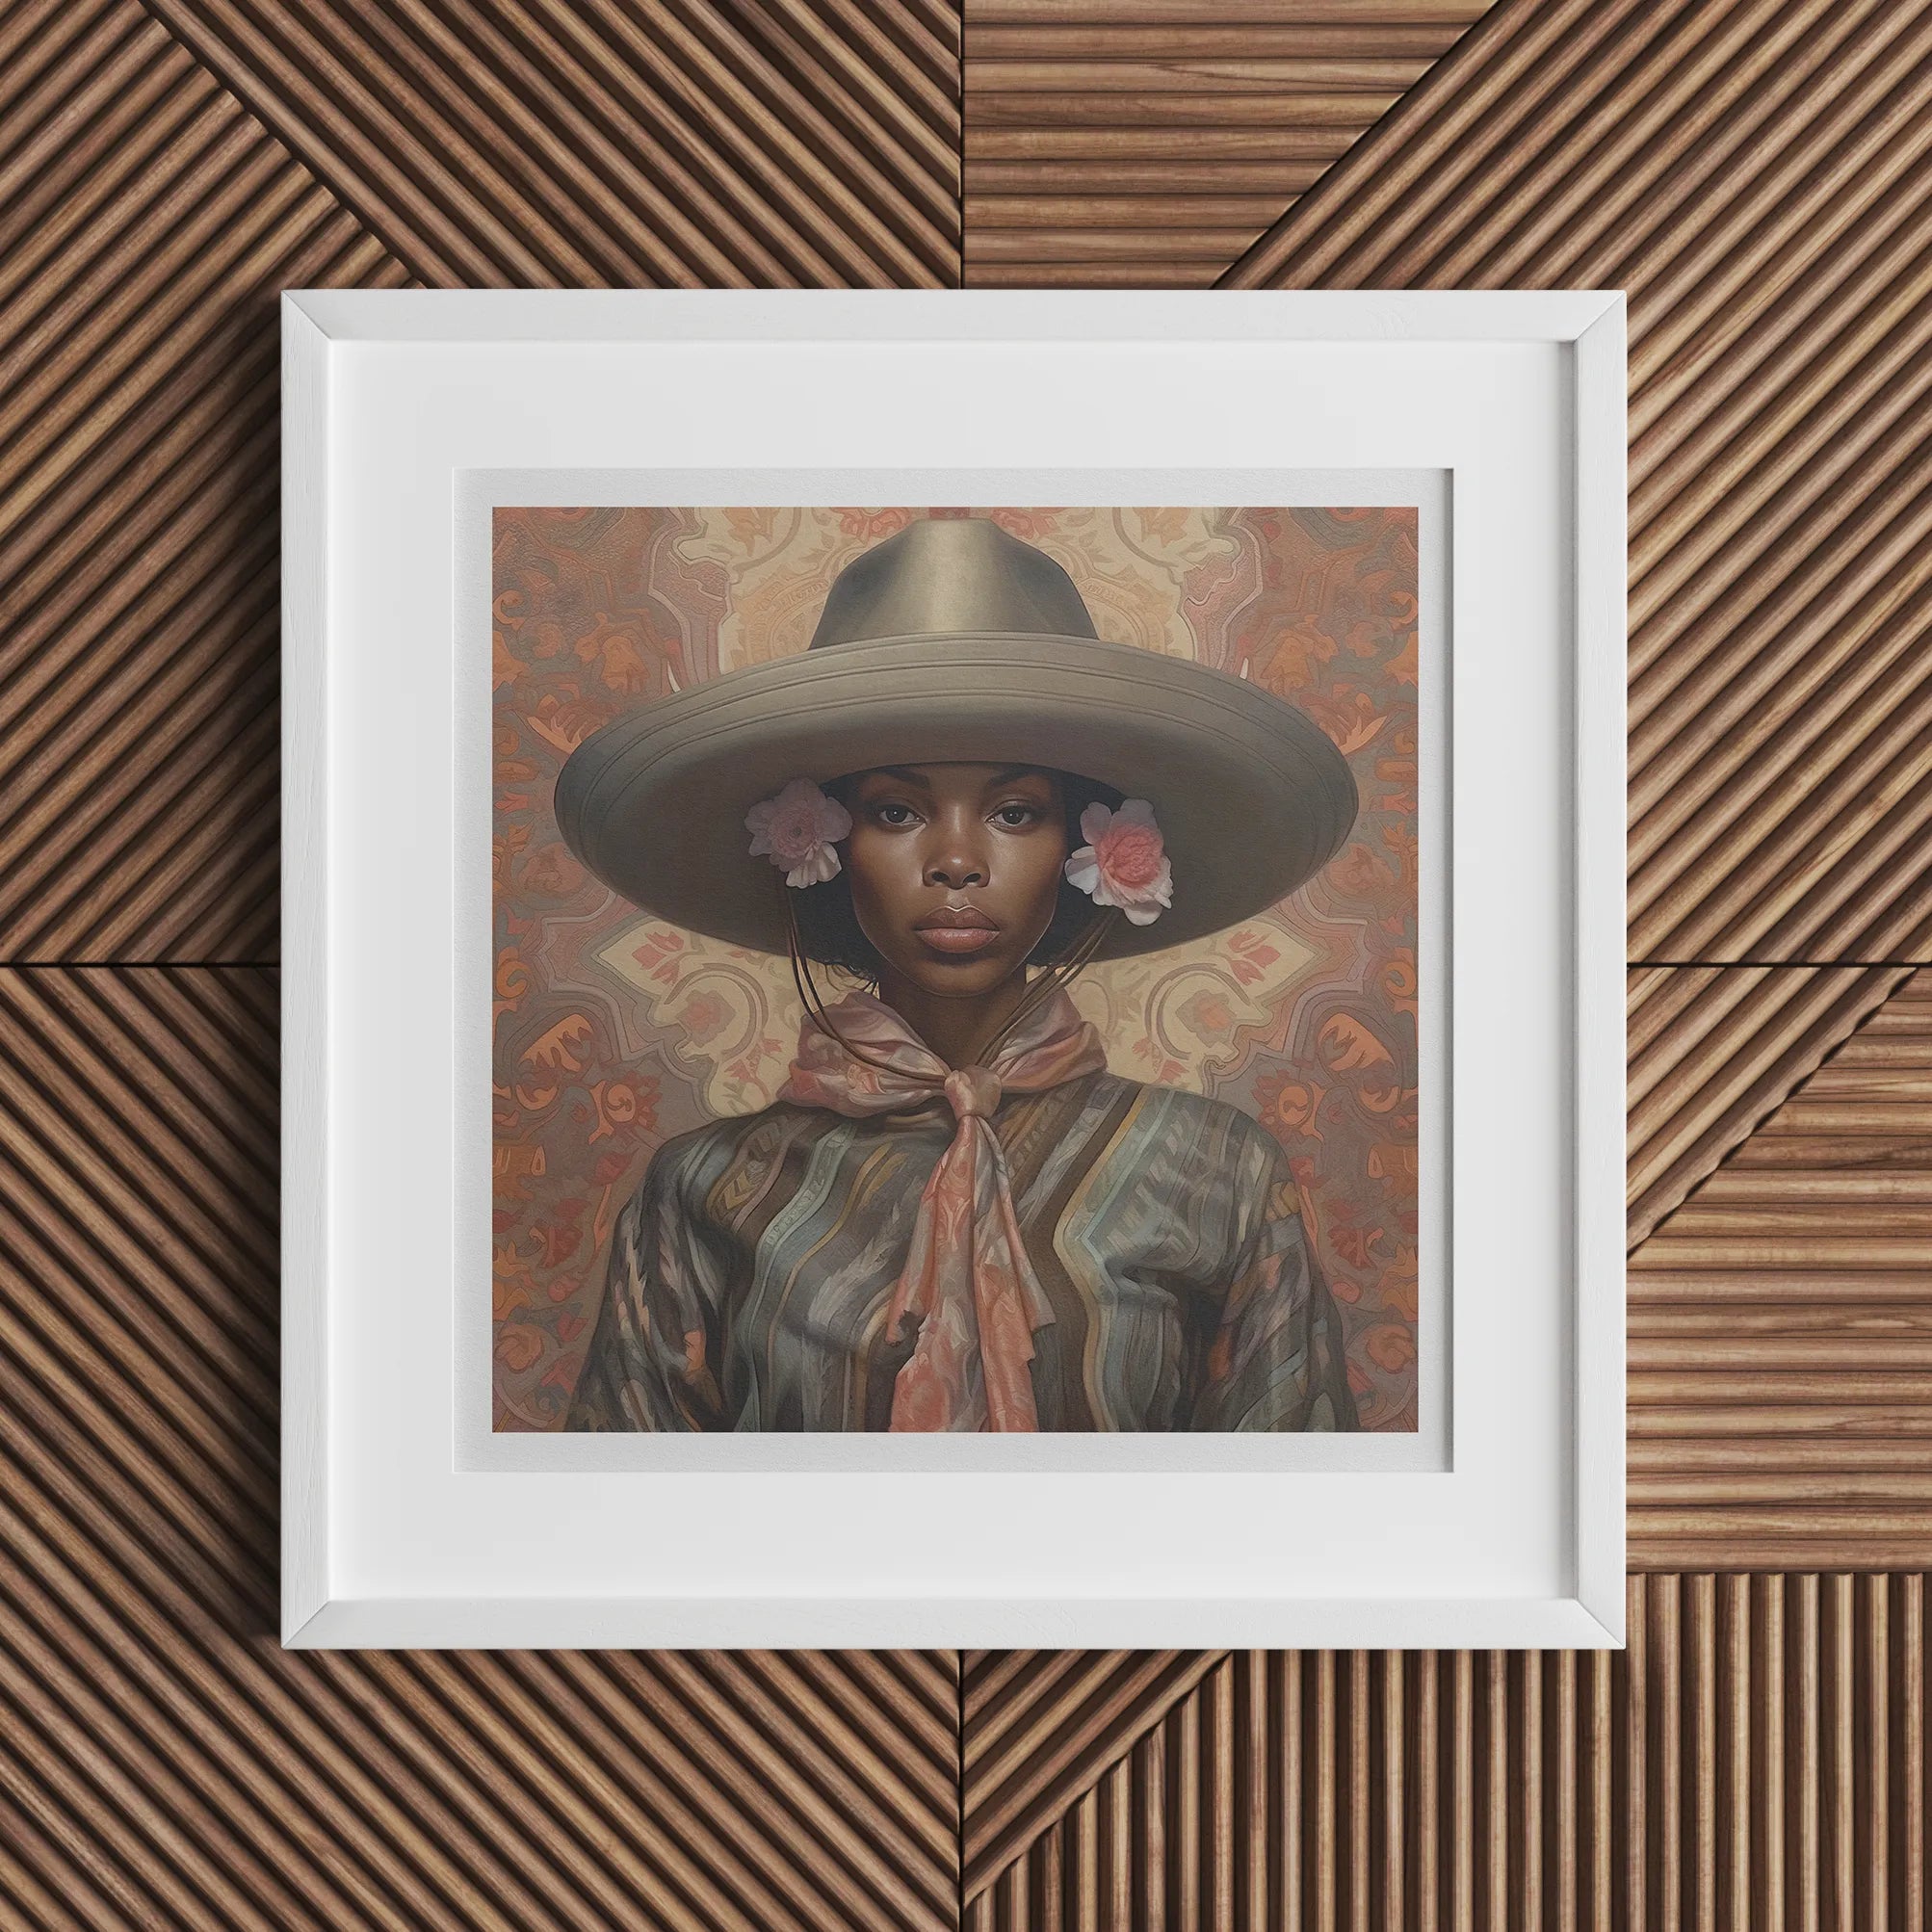 Sadie - Lesbian Black Cowgirl Art Print - Wlw Sapphic Femme - 16’x16’ - Posters Prints & Visual Artwork - Aesthetic Art